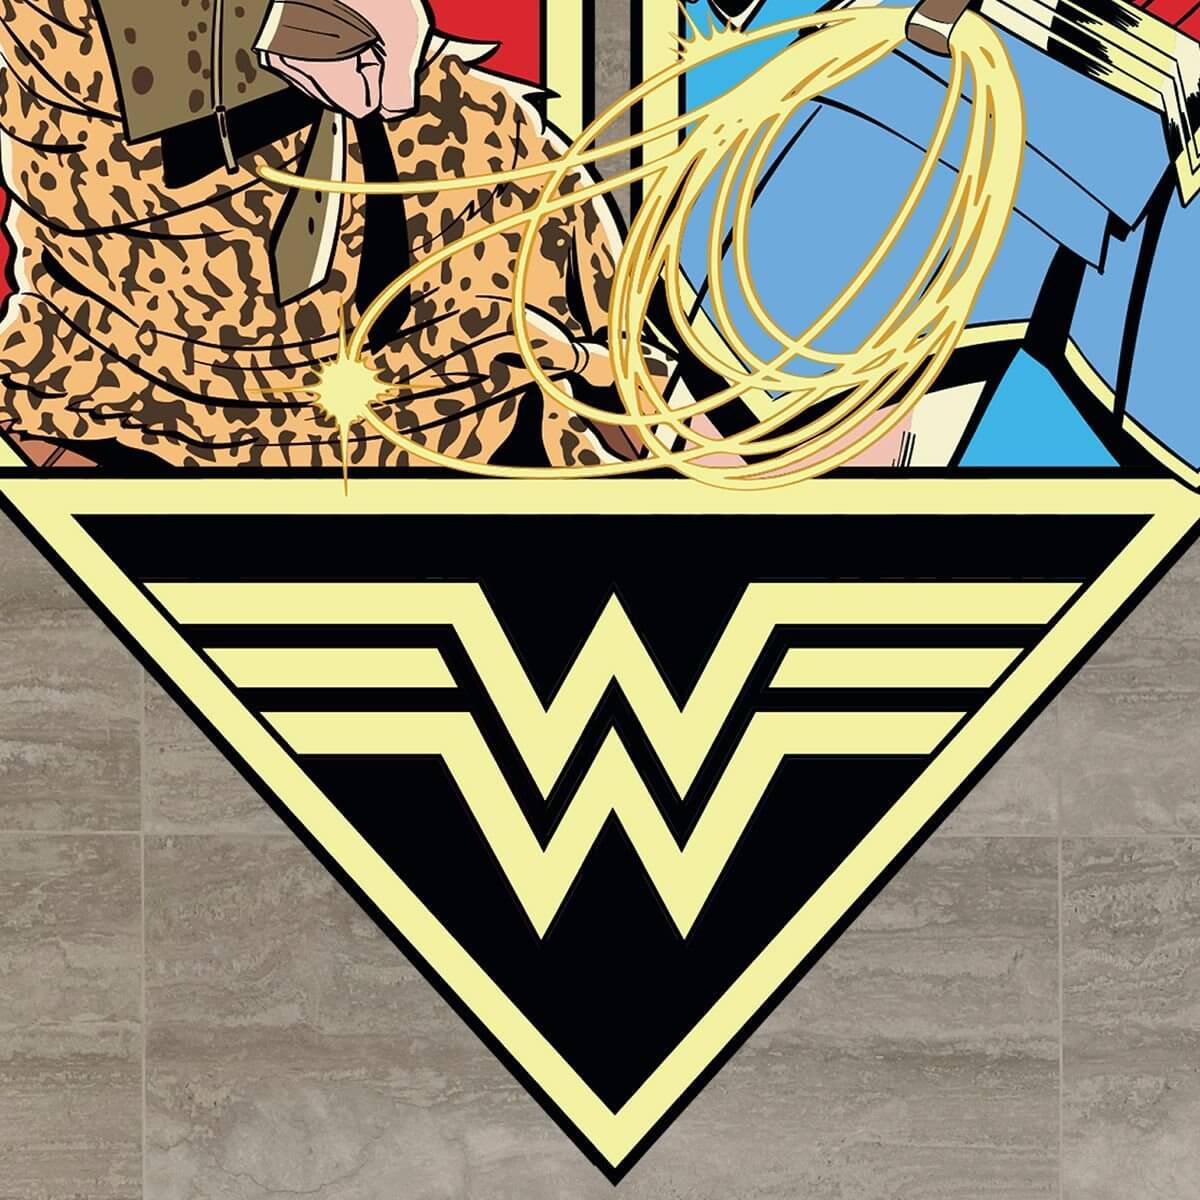 Kismet Decals WW84 Barbara vs Diana Licensed Wall Sticker - Easy DIY Wonder Woman 1984 Home & Room Decor Comic Art - Kismet Decals